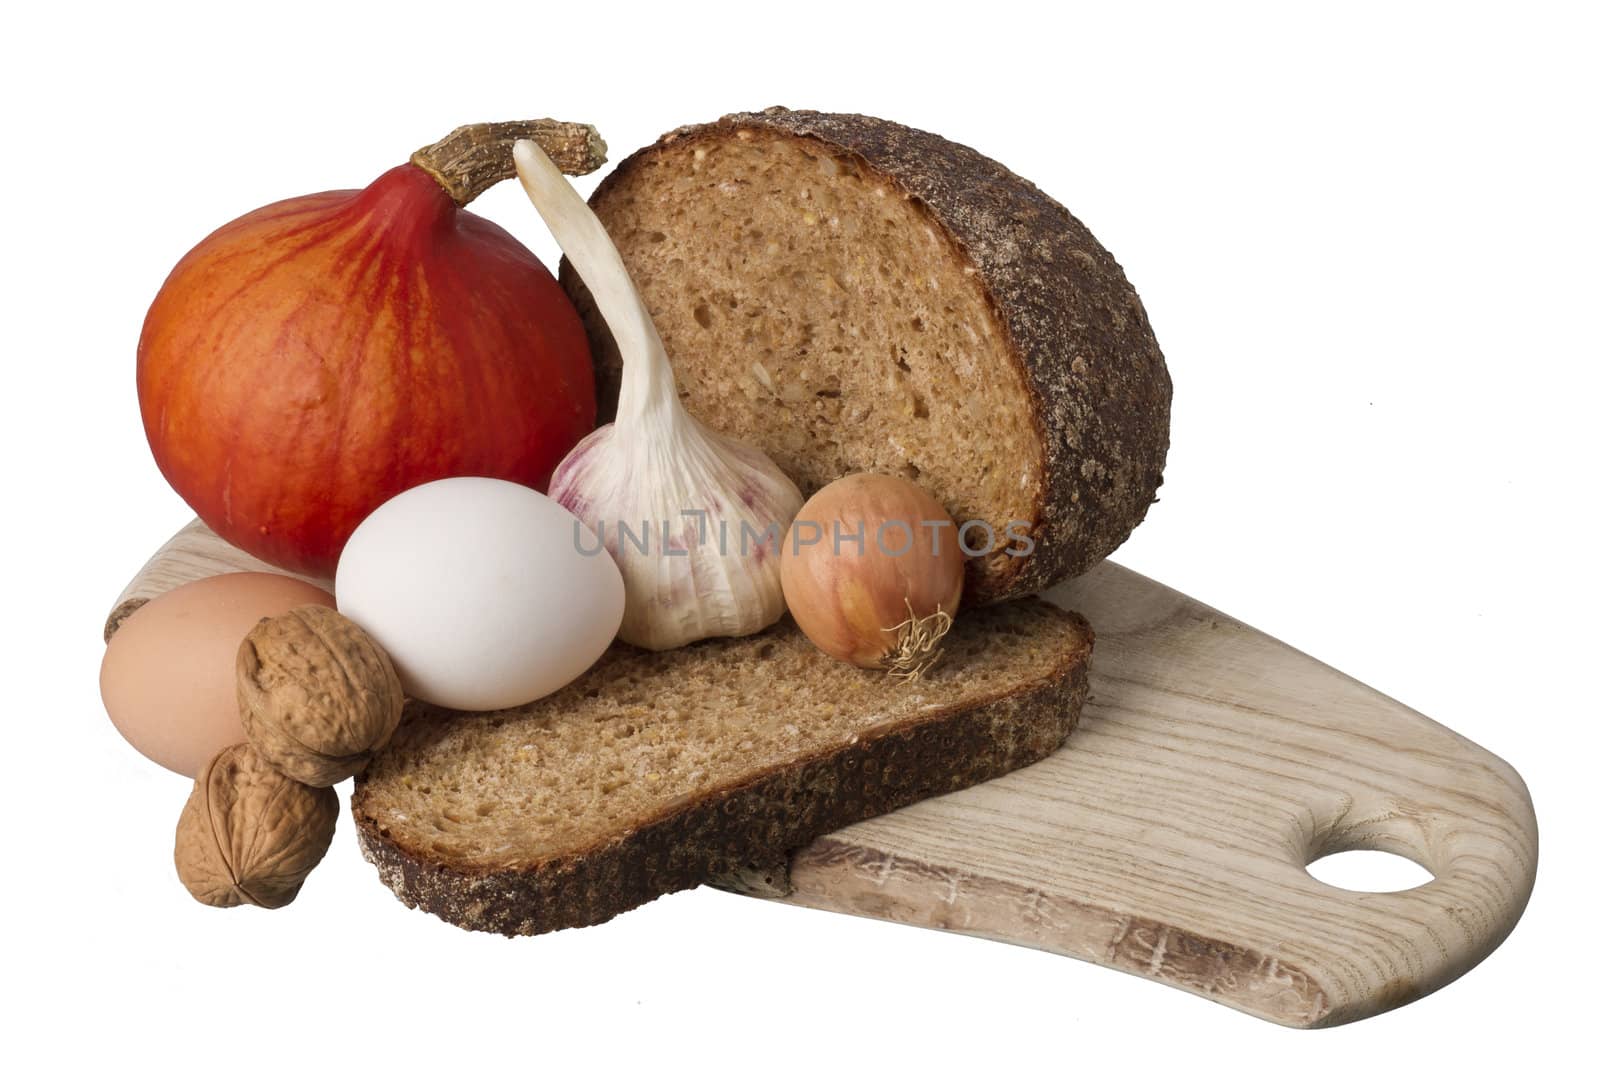 brown bread on shelf with onion, garlic and walnut by gewoldi